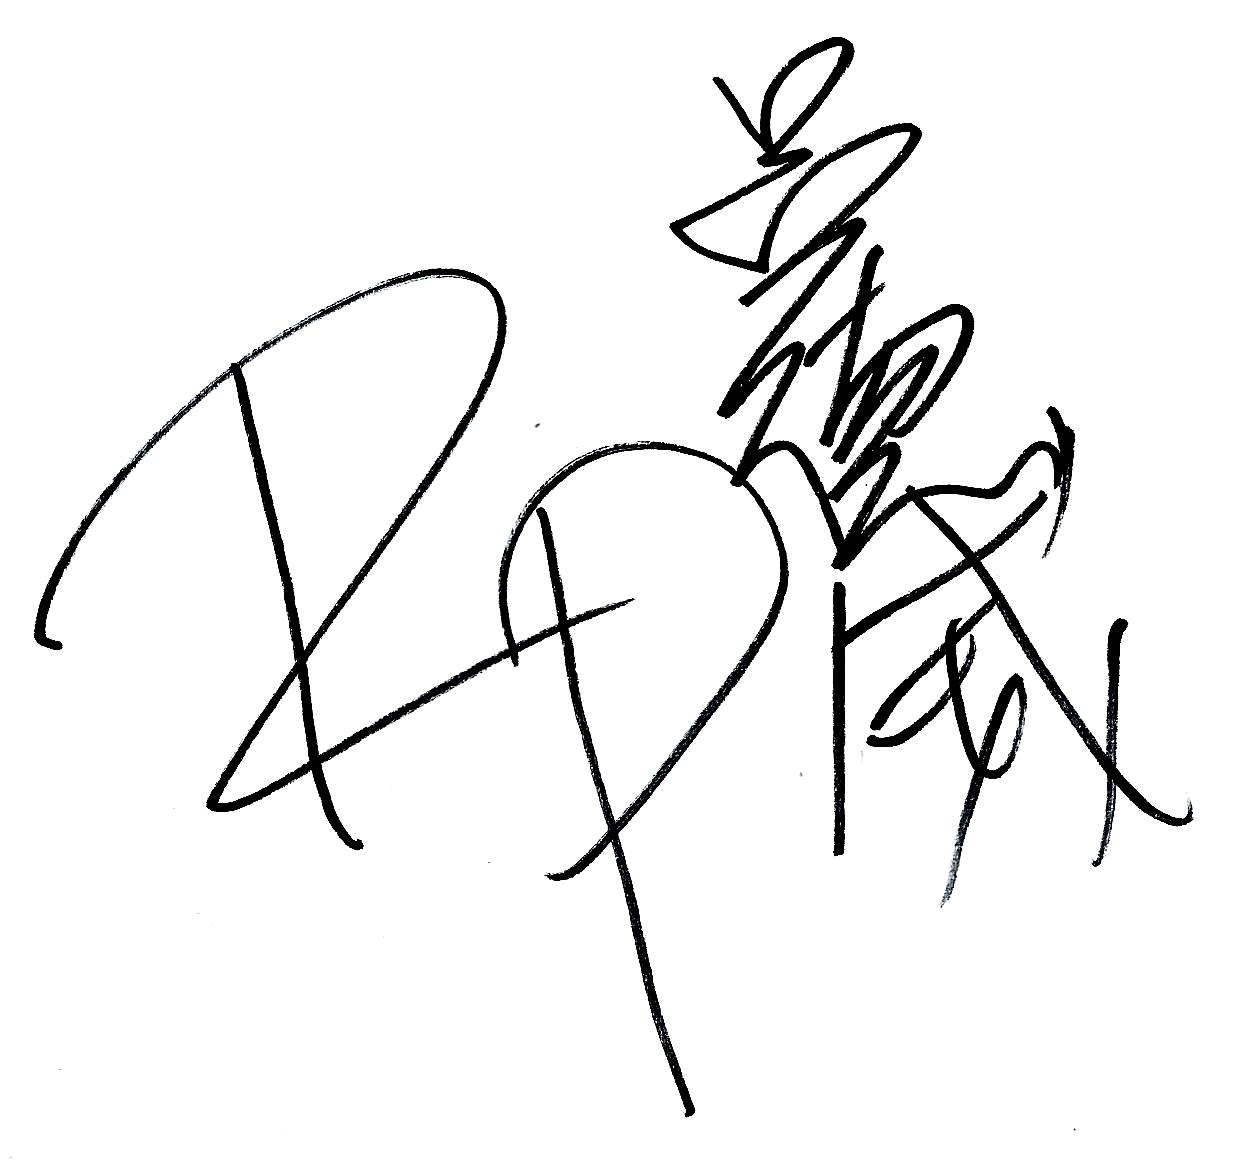 richard-signature